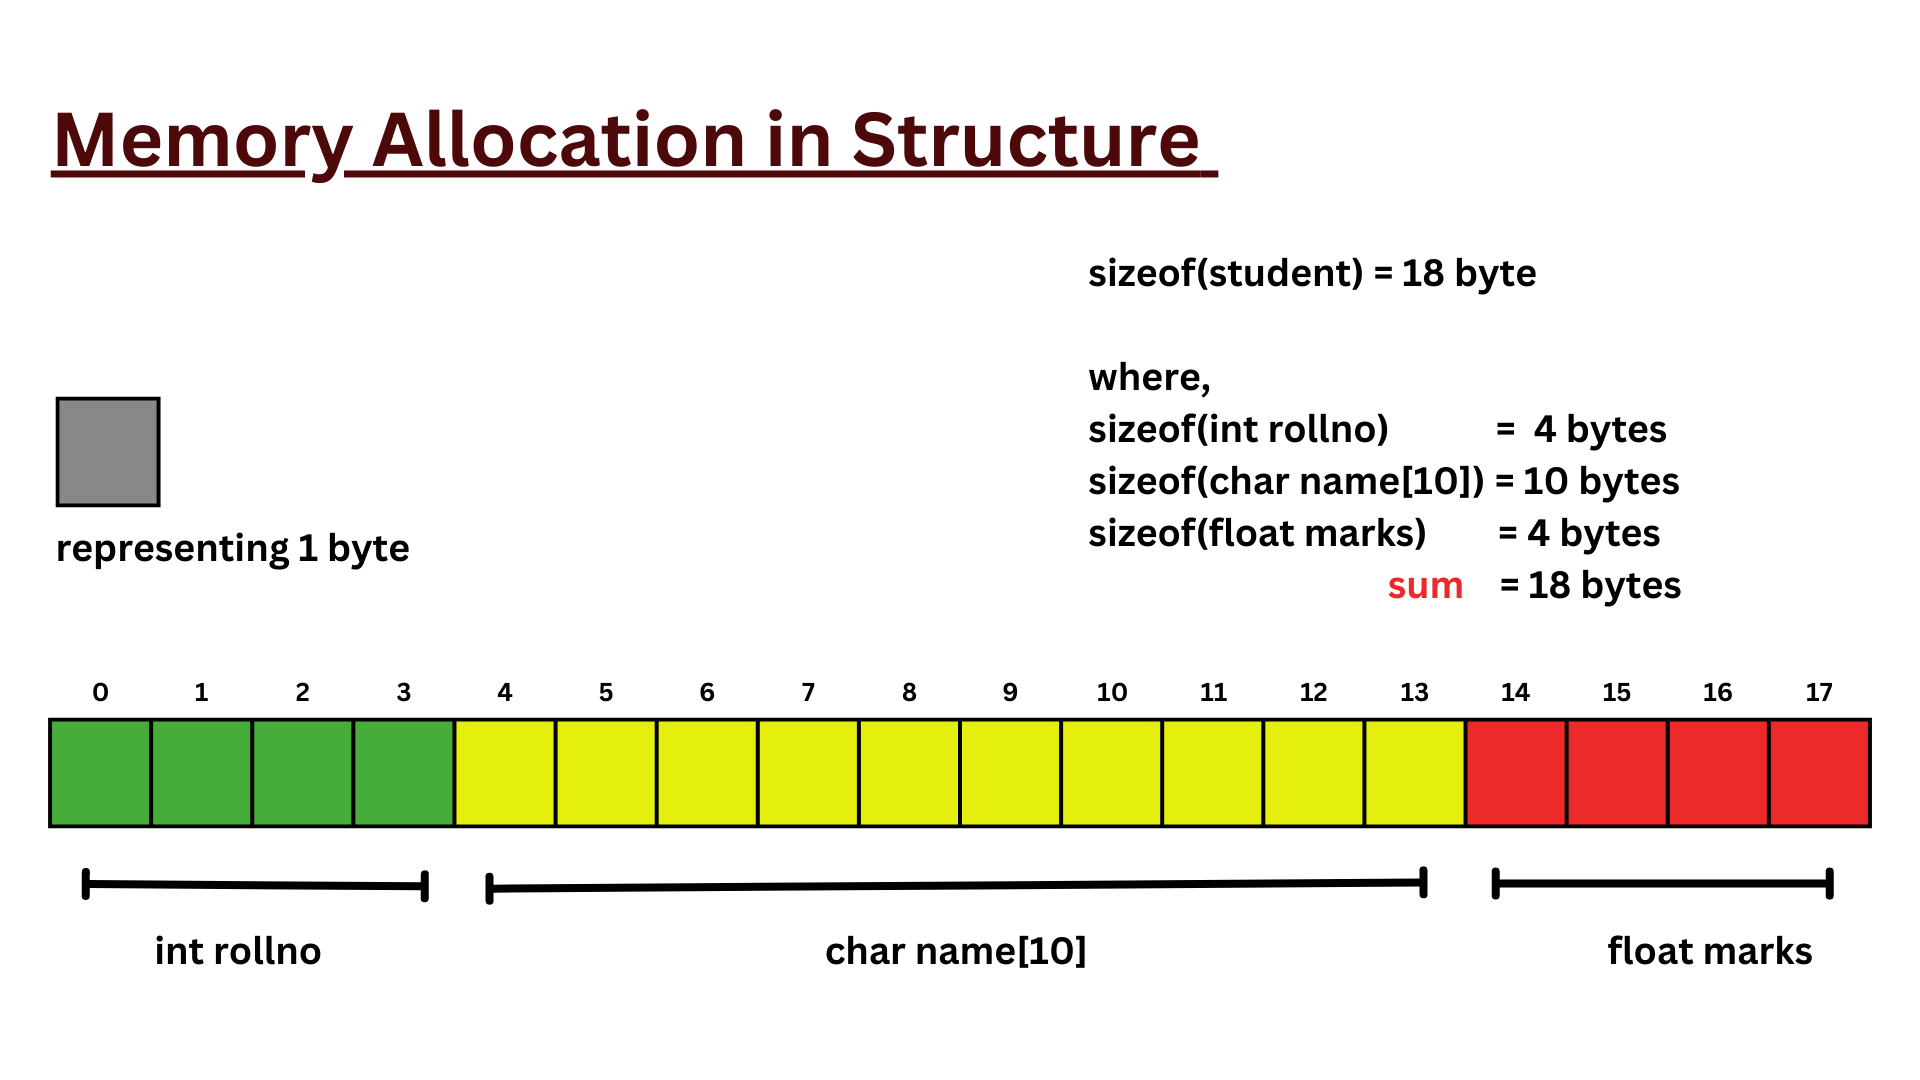 Structures In C